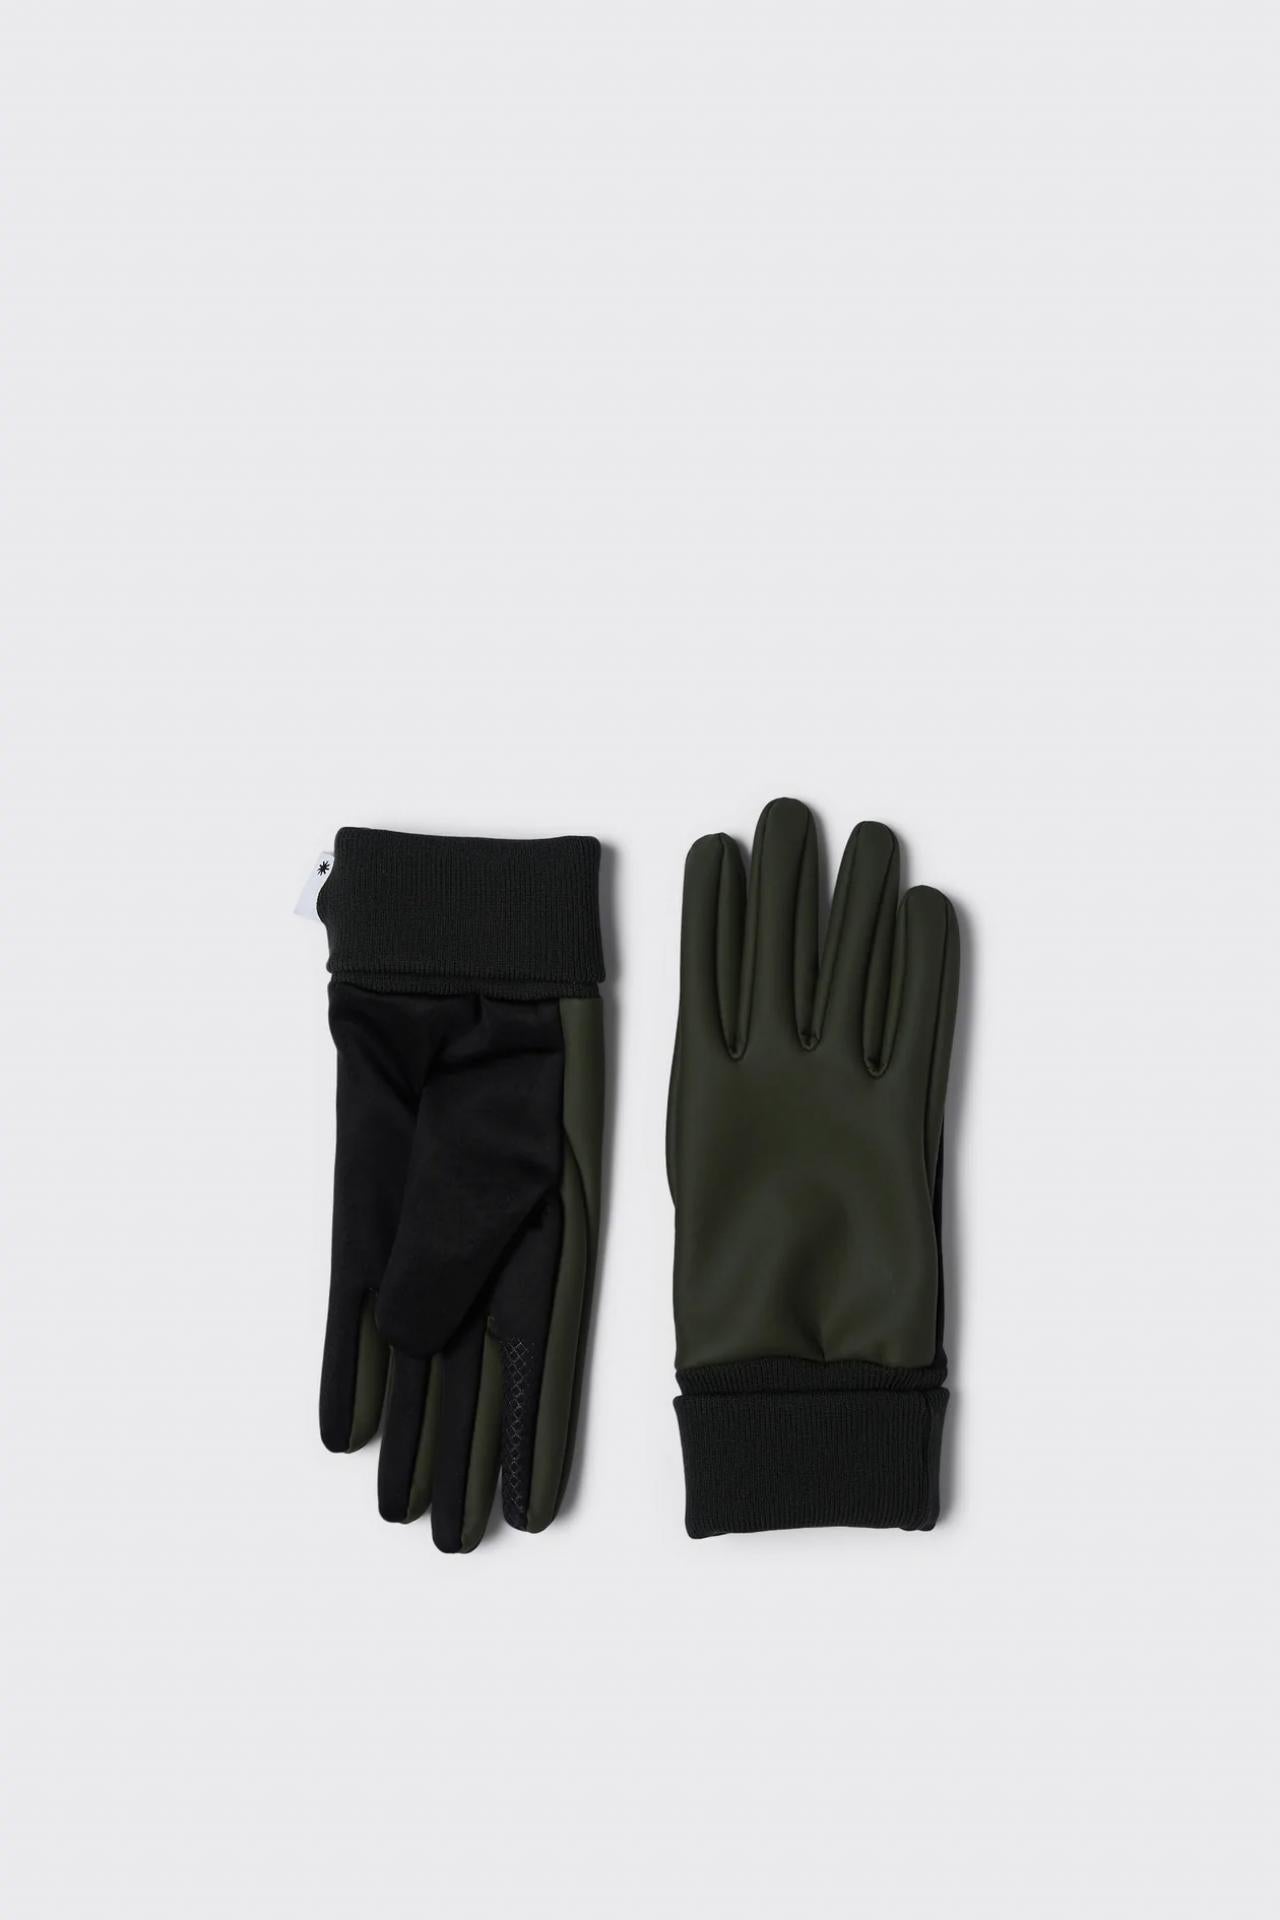 Rains Gloves Handschuhe Green S